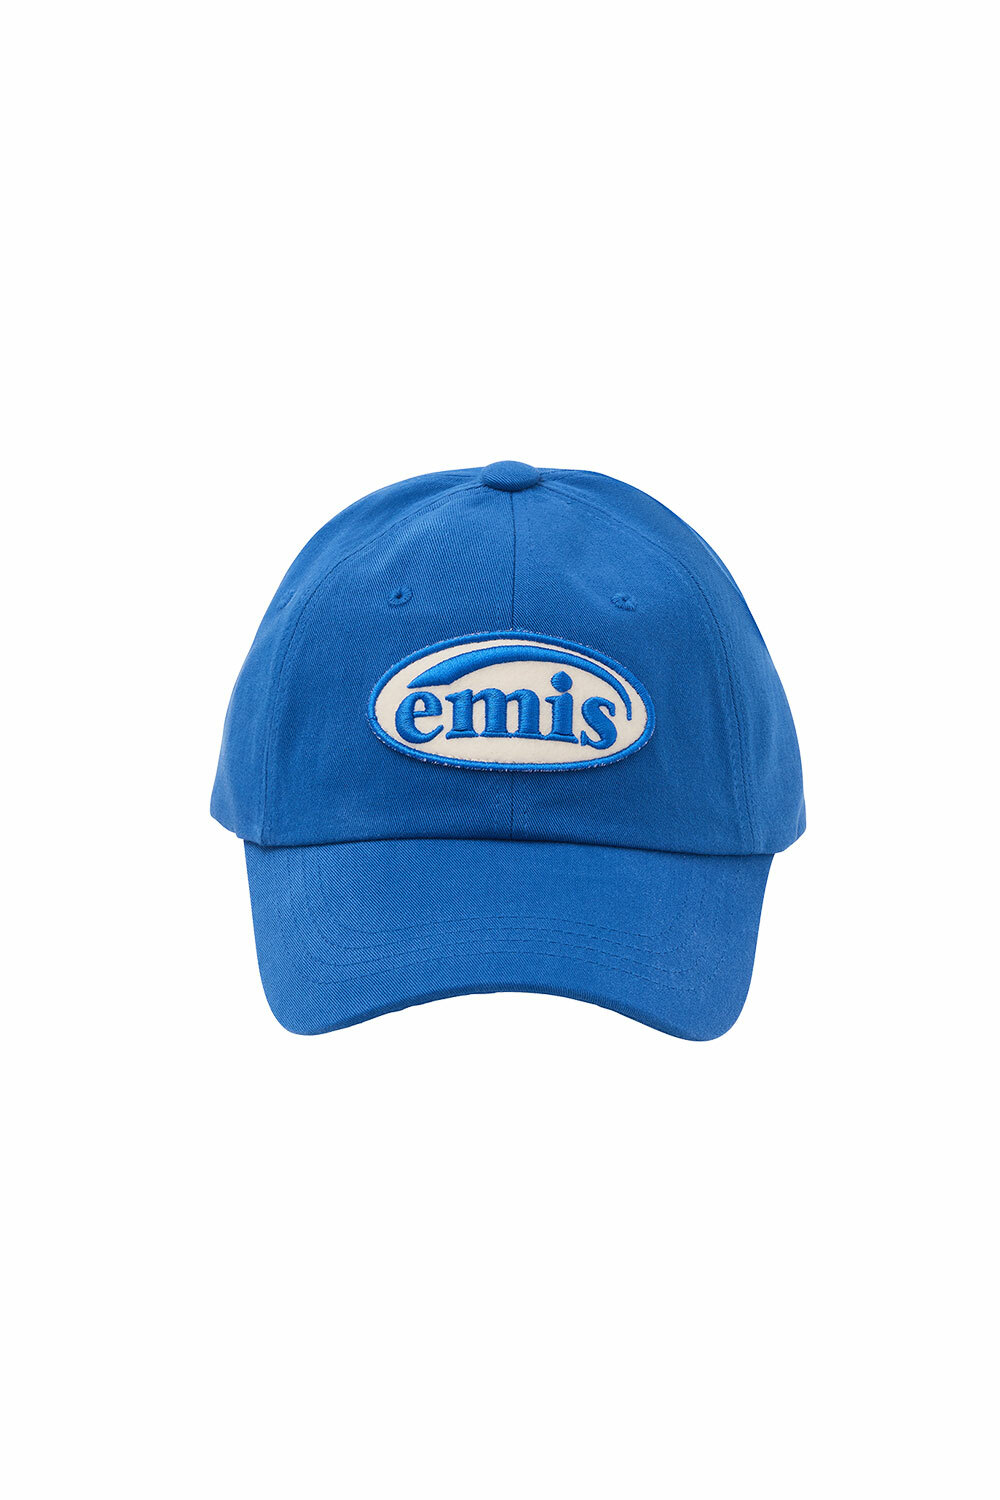 EMIS CORDUROY TWO-TONE BALL CAP-BLUE 卓越 - 帽子